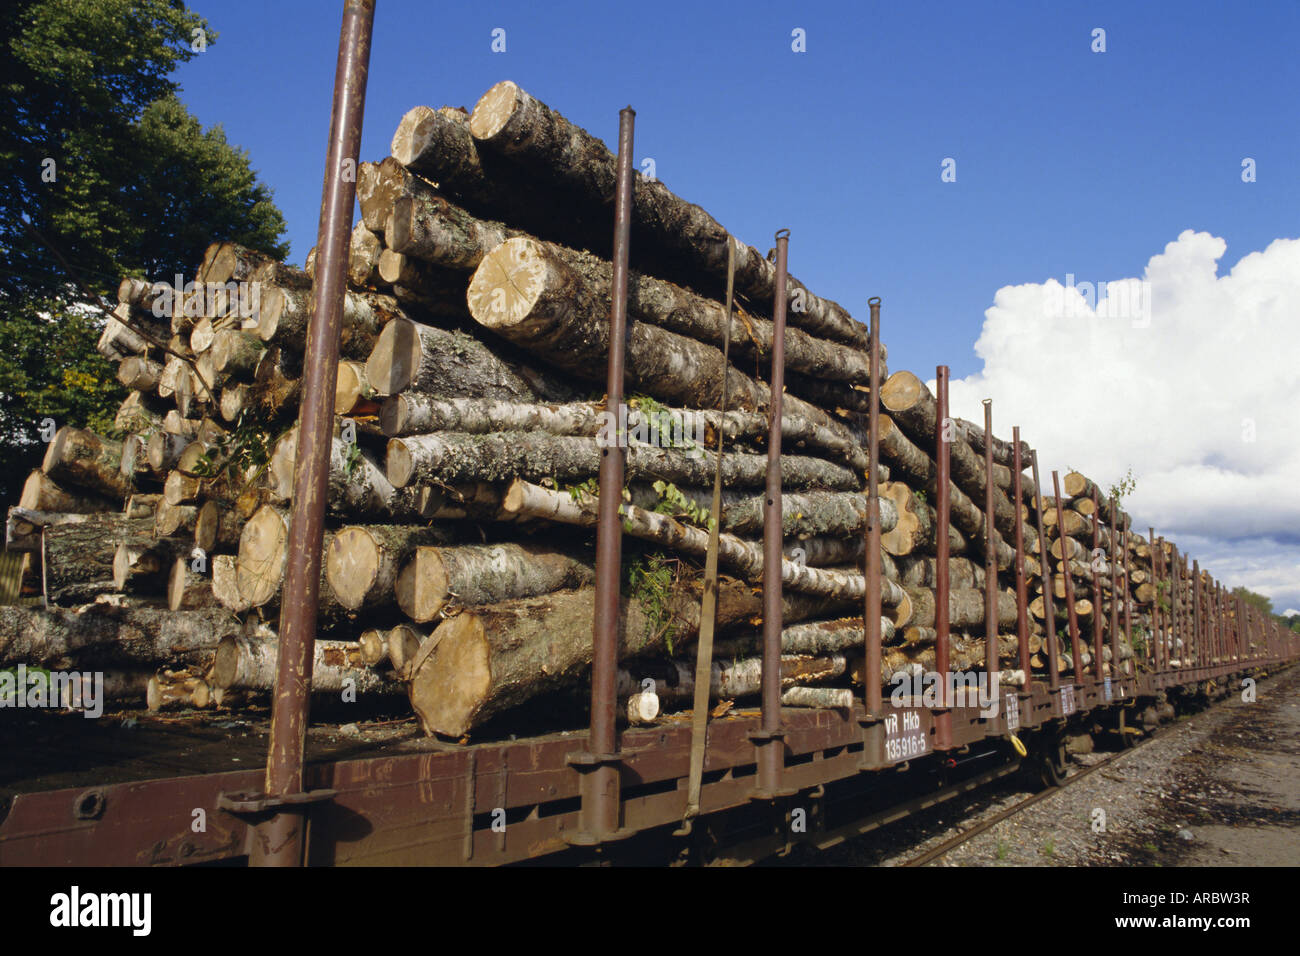 Timber logs at rail siding, Finland, Scandinavia, Europe Stock Photo